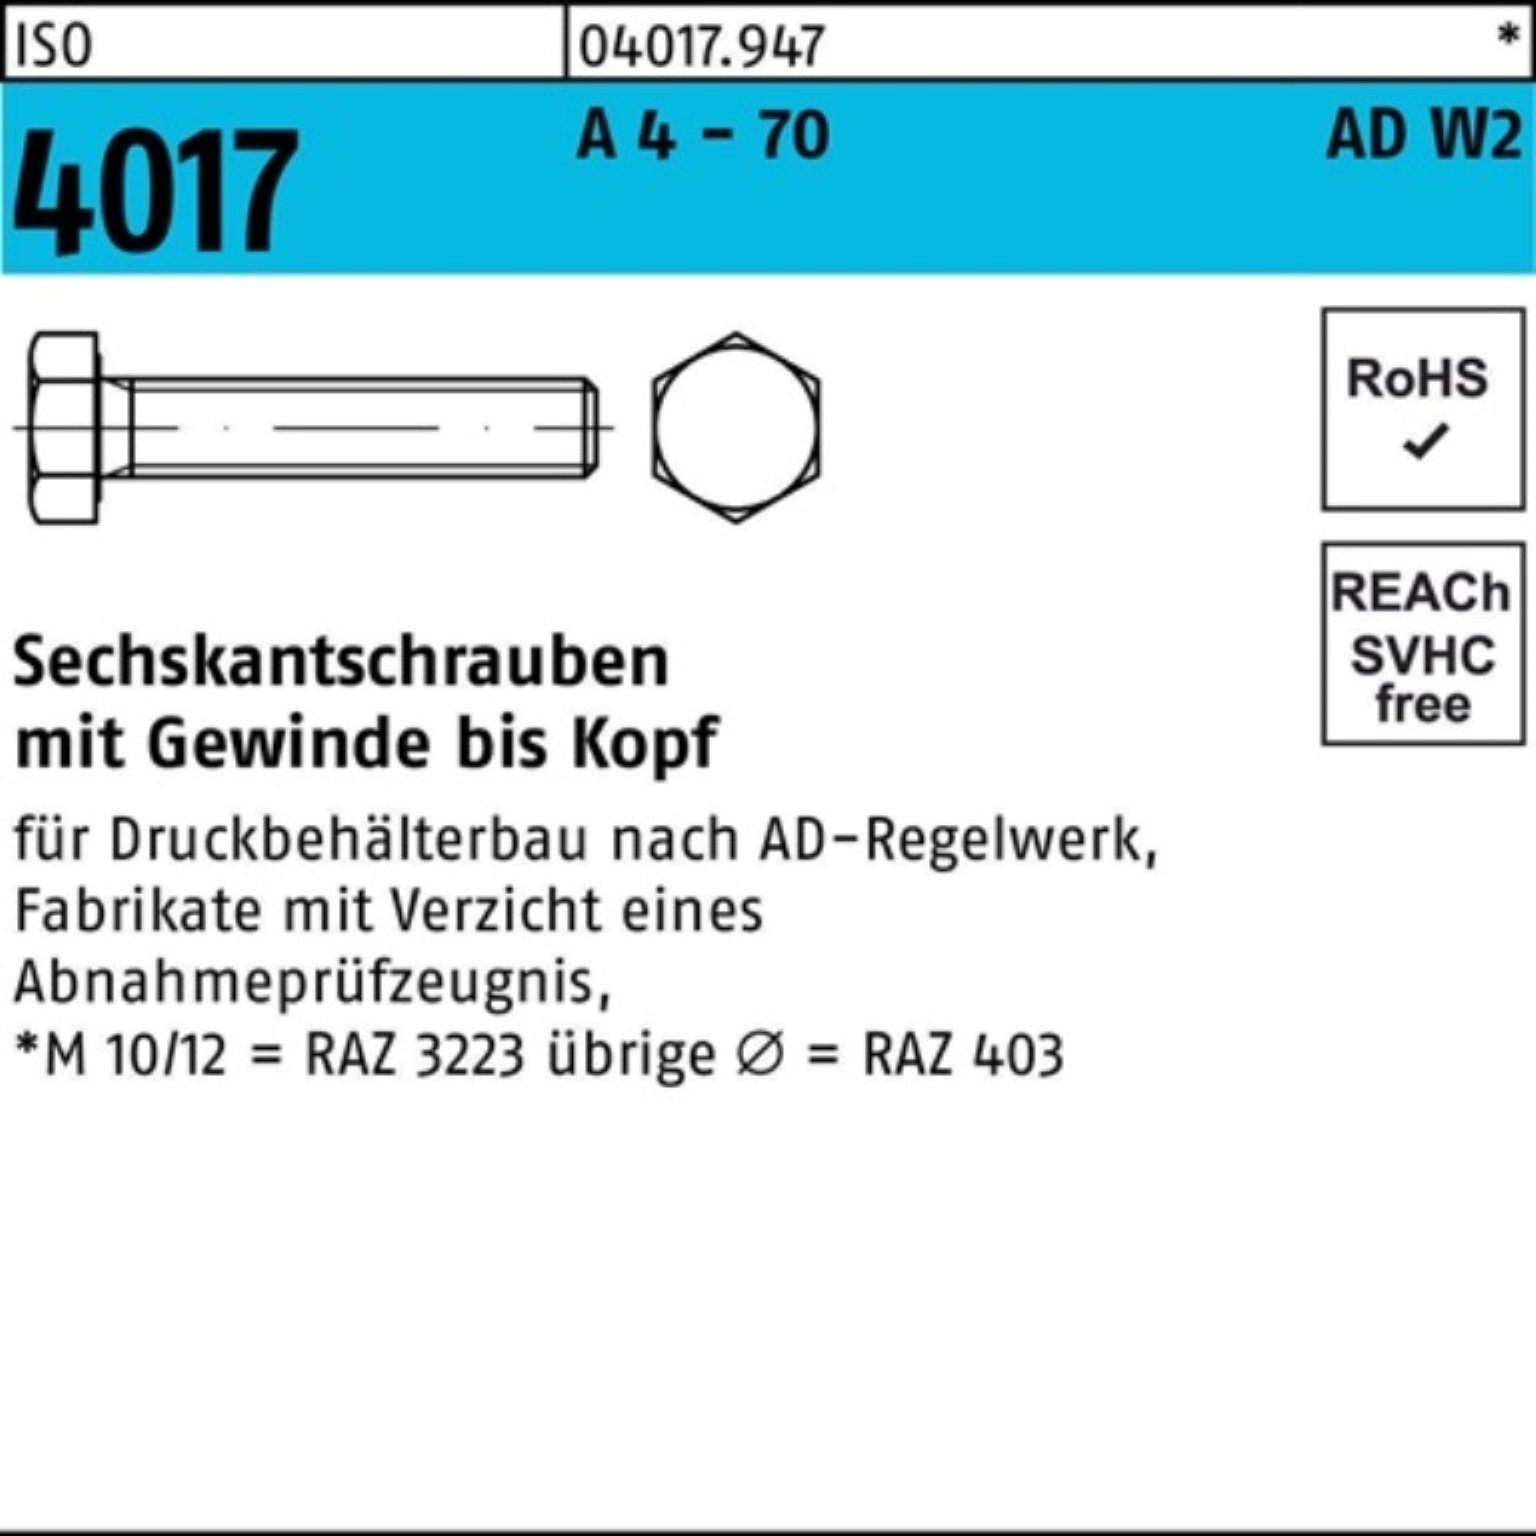 Bufab Sechskantschraube 200er Pack Sechskantschraube ISO 4017 VG M8x 12 A 4 - 70 AD-W2 200 St | Schrauben